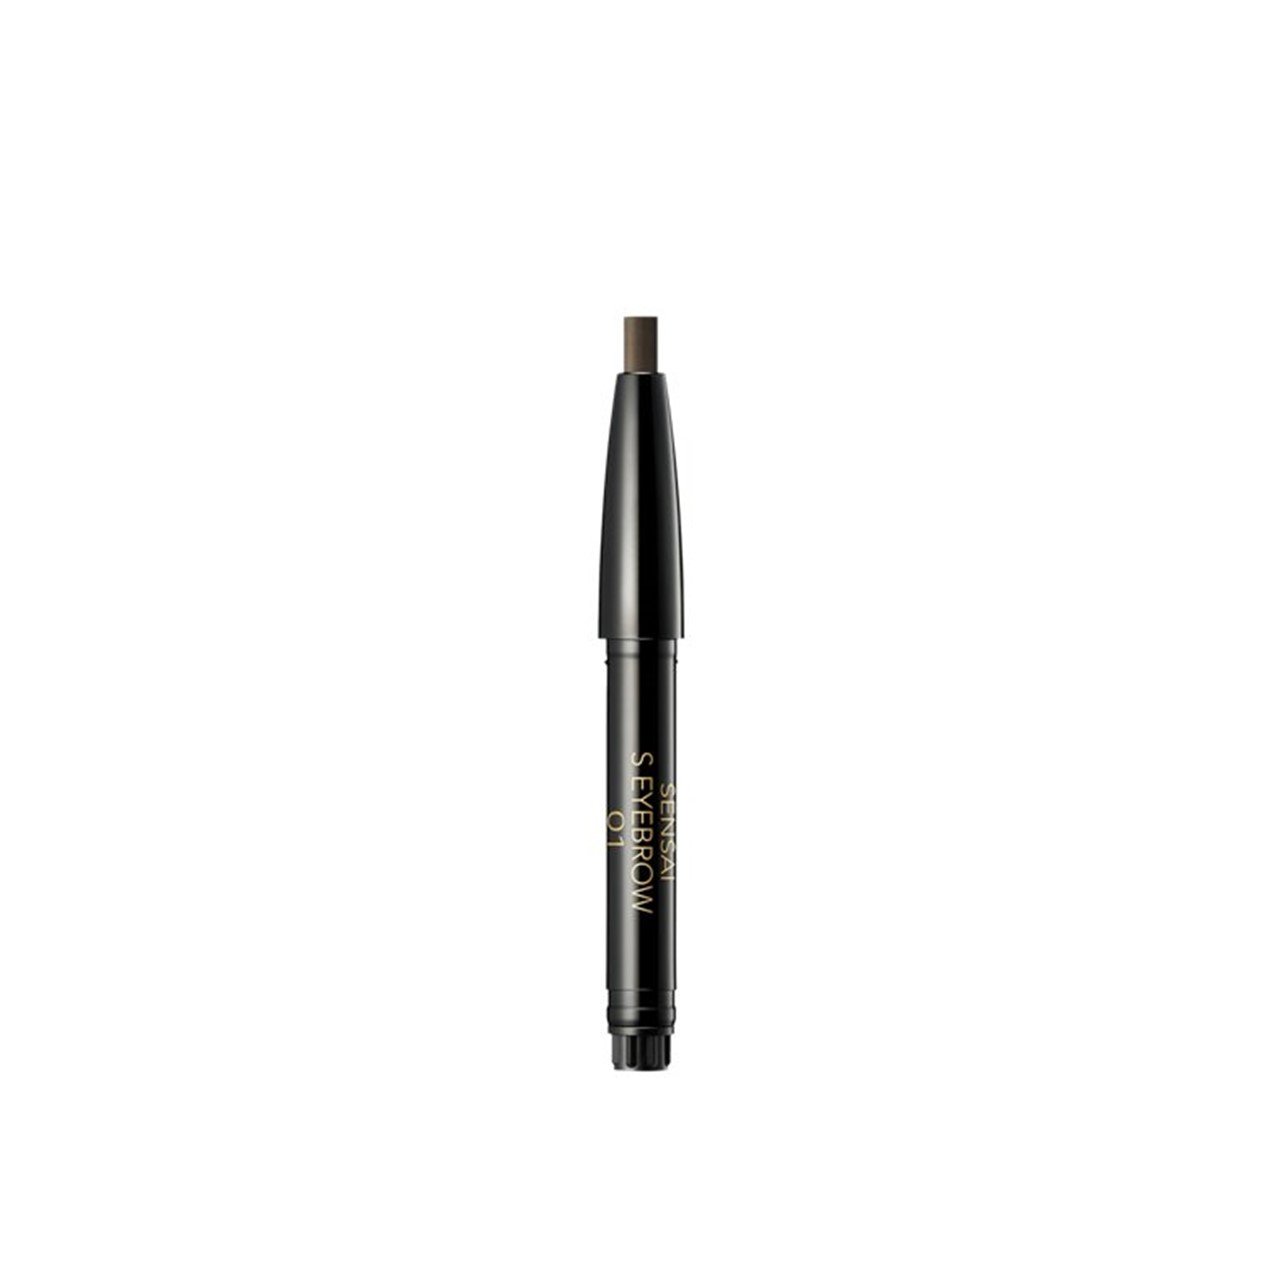 SENSAI Styling Eyebrow Pencil Refill 01 Dark Brown 0.2g (0.007 oz)